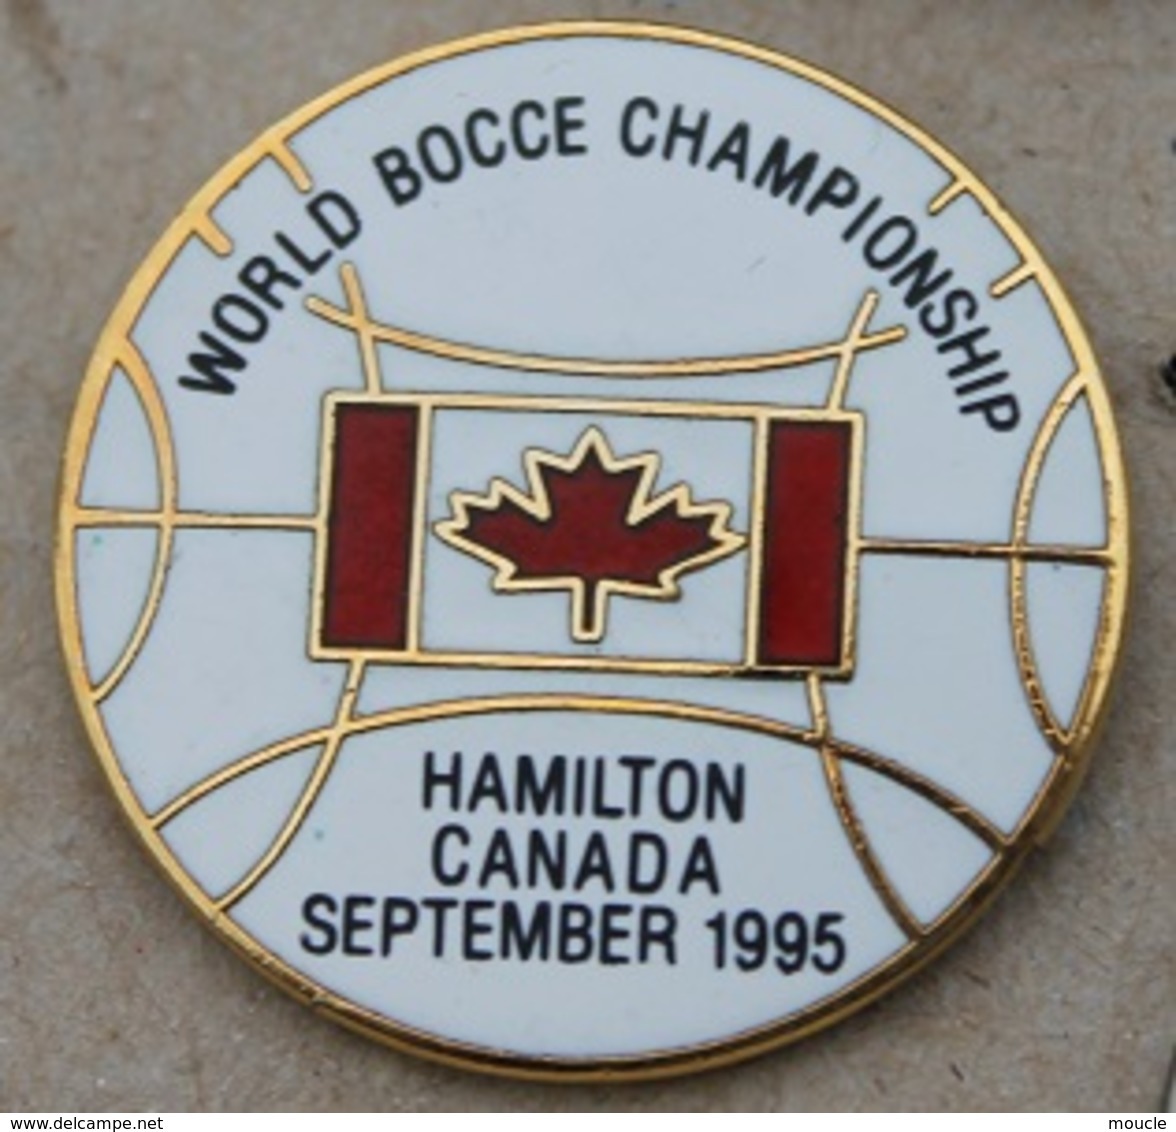 WORLD BOCCE CHAMPIONSHIP - HAMILTON CANADA SEPTEMBER 1995 - FEUILLE D'ERABLE - BOULE - PETANQUE -      (25) - Bocce